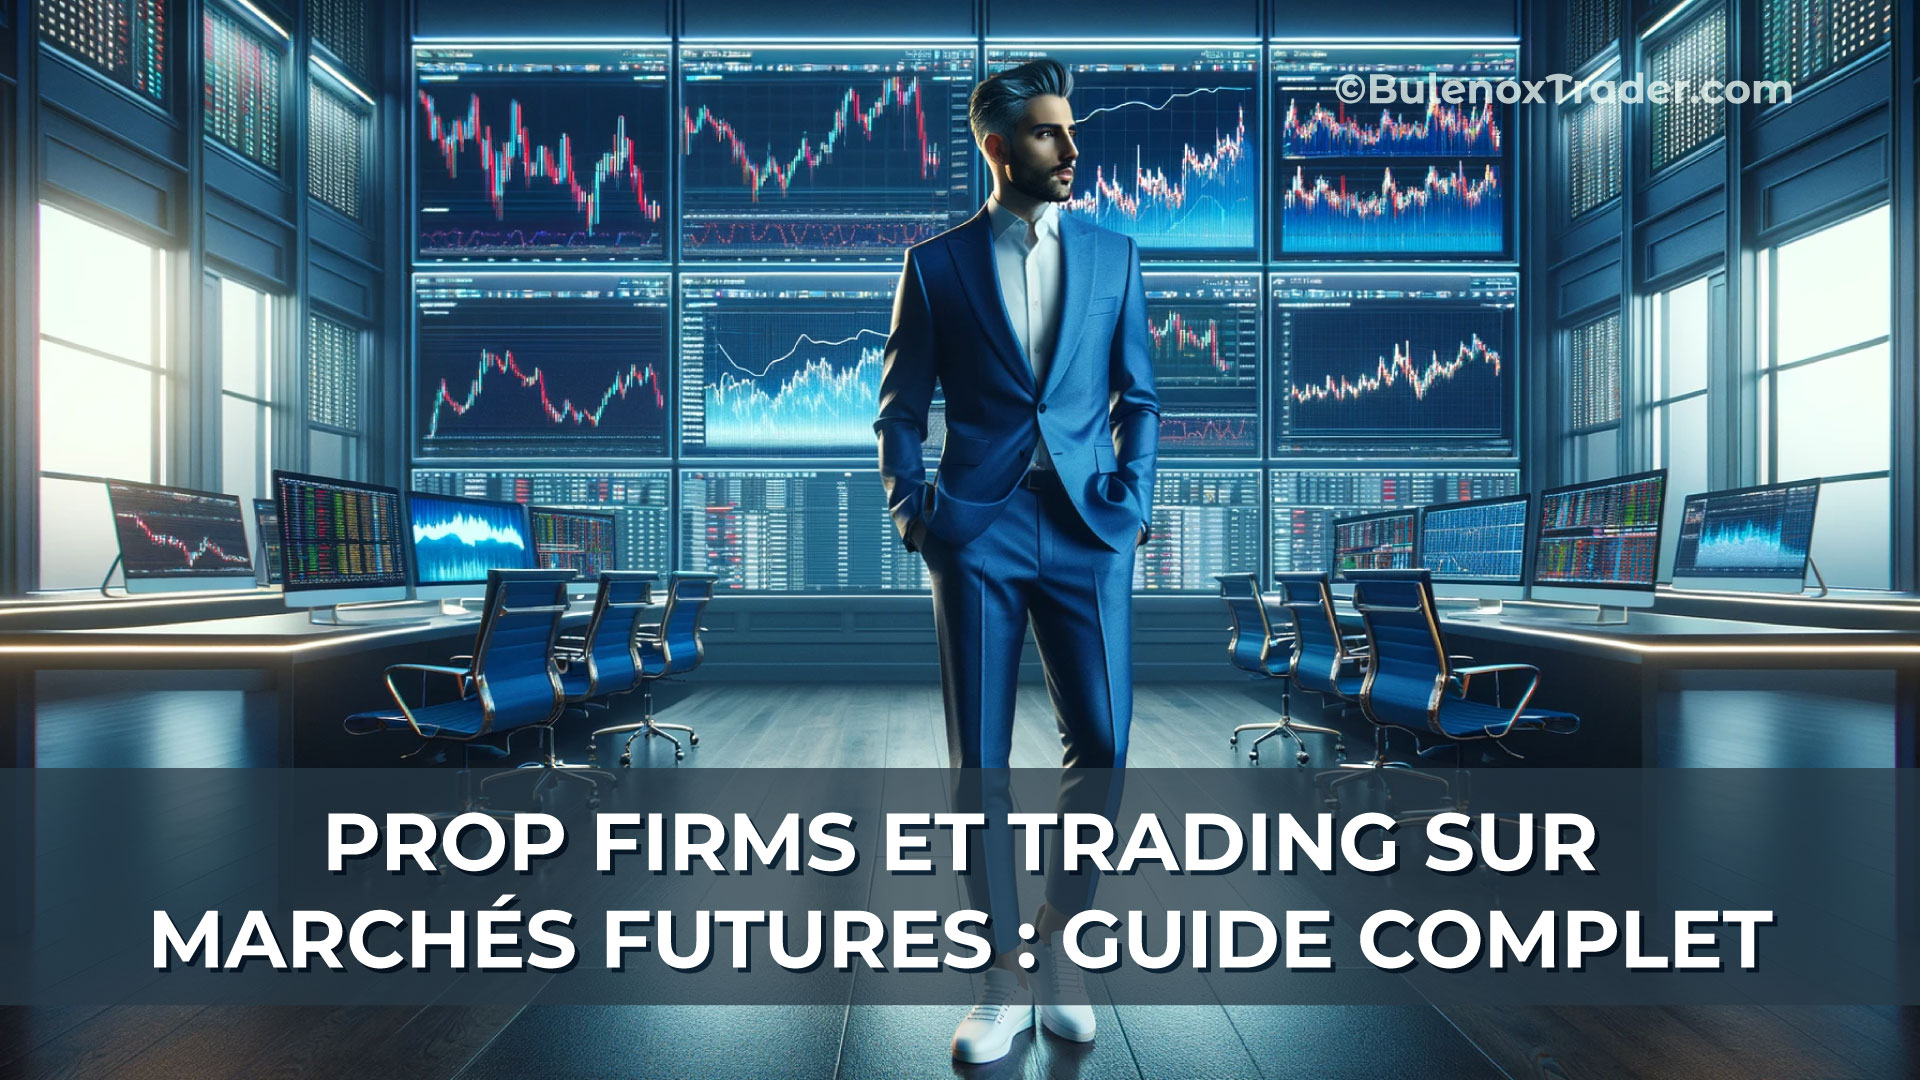 Prop-Firms-et-Trading-sur-Marchés-Futures-Guide-Complet-on-Bulenox-Trader-Website